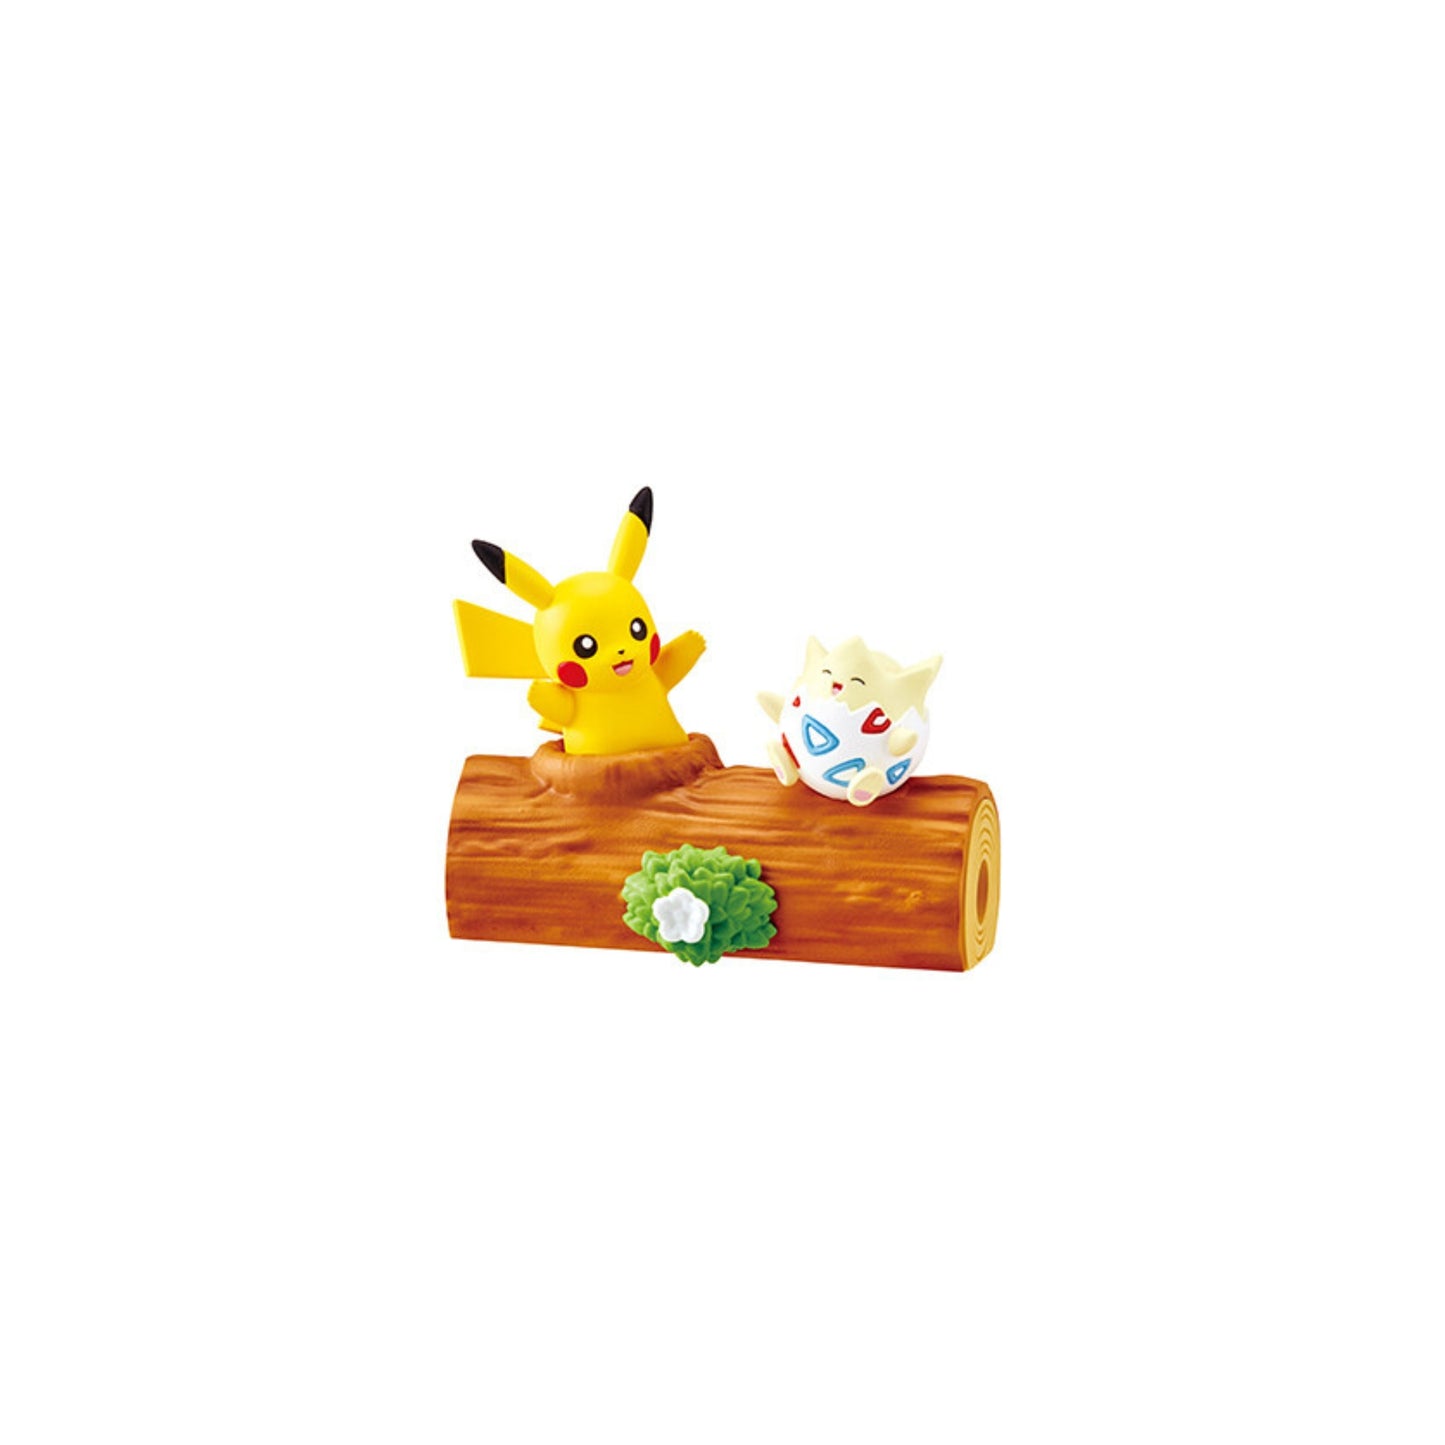 Pokemon Nakayoshi Friends 2 Einzelfigur: Pikachu & Togepy Re-Ment Trading Figur